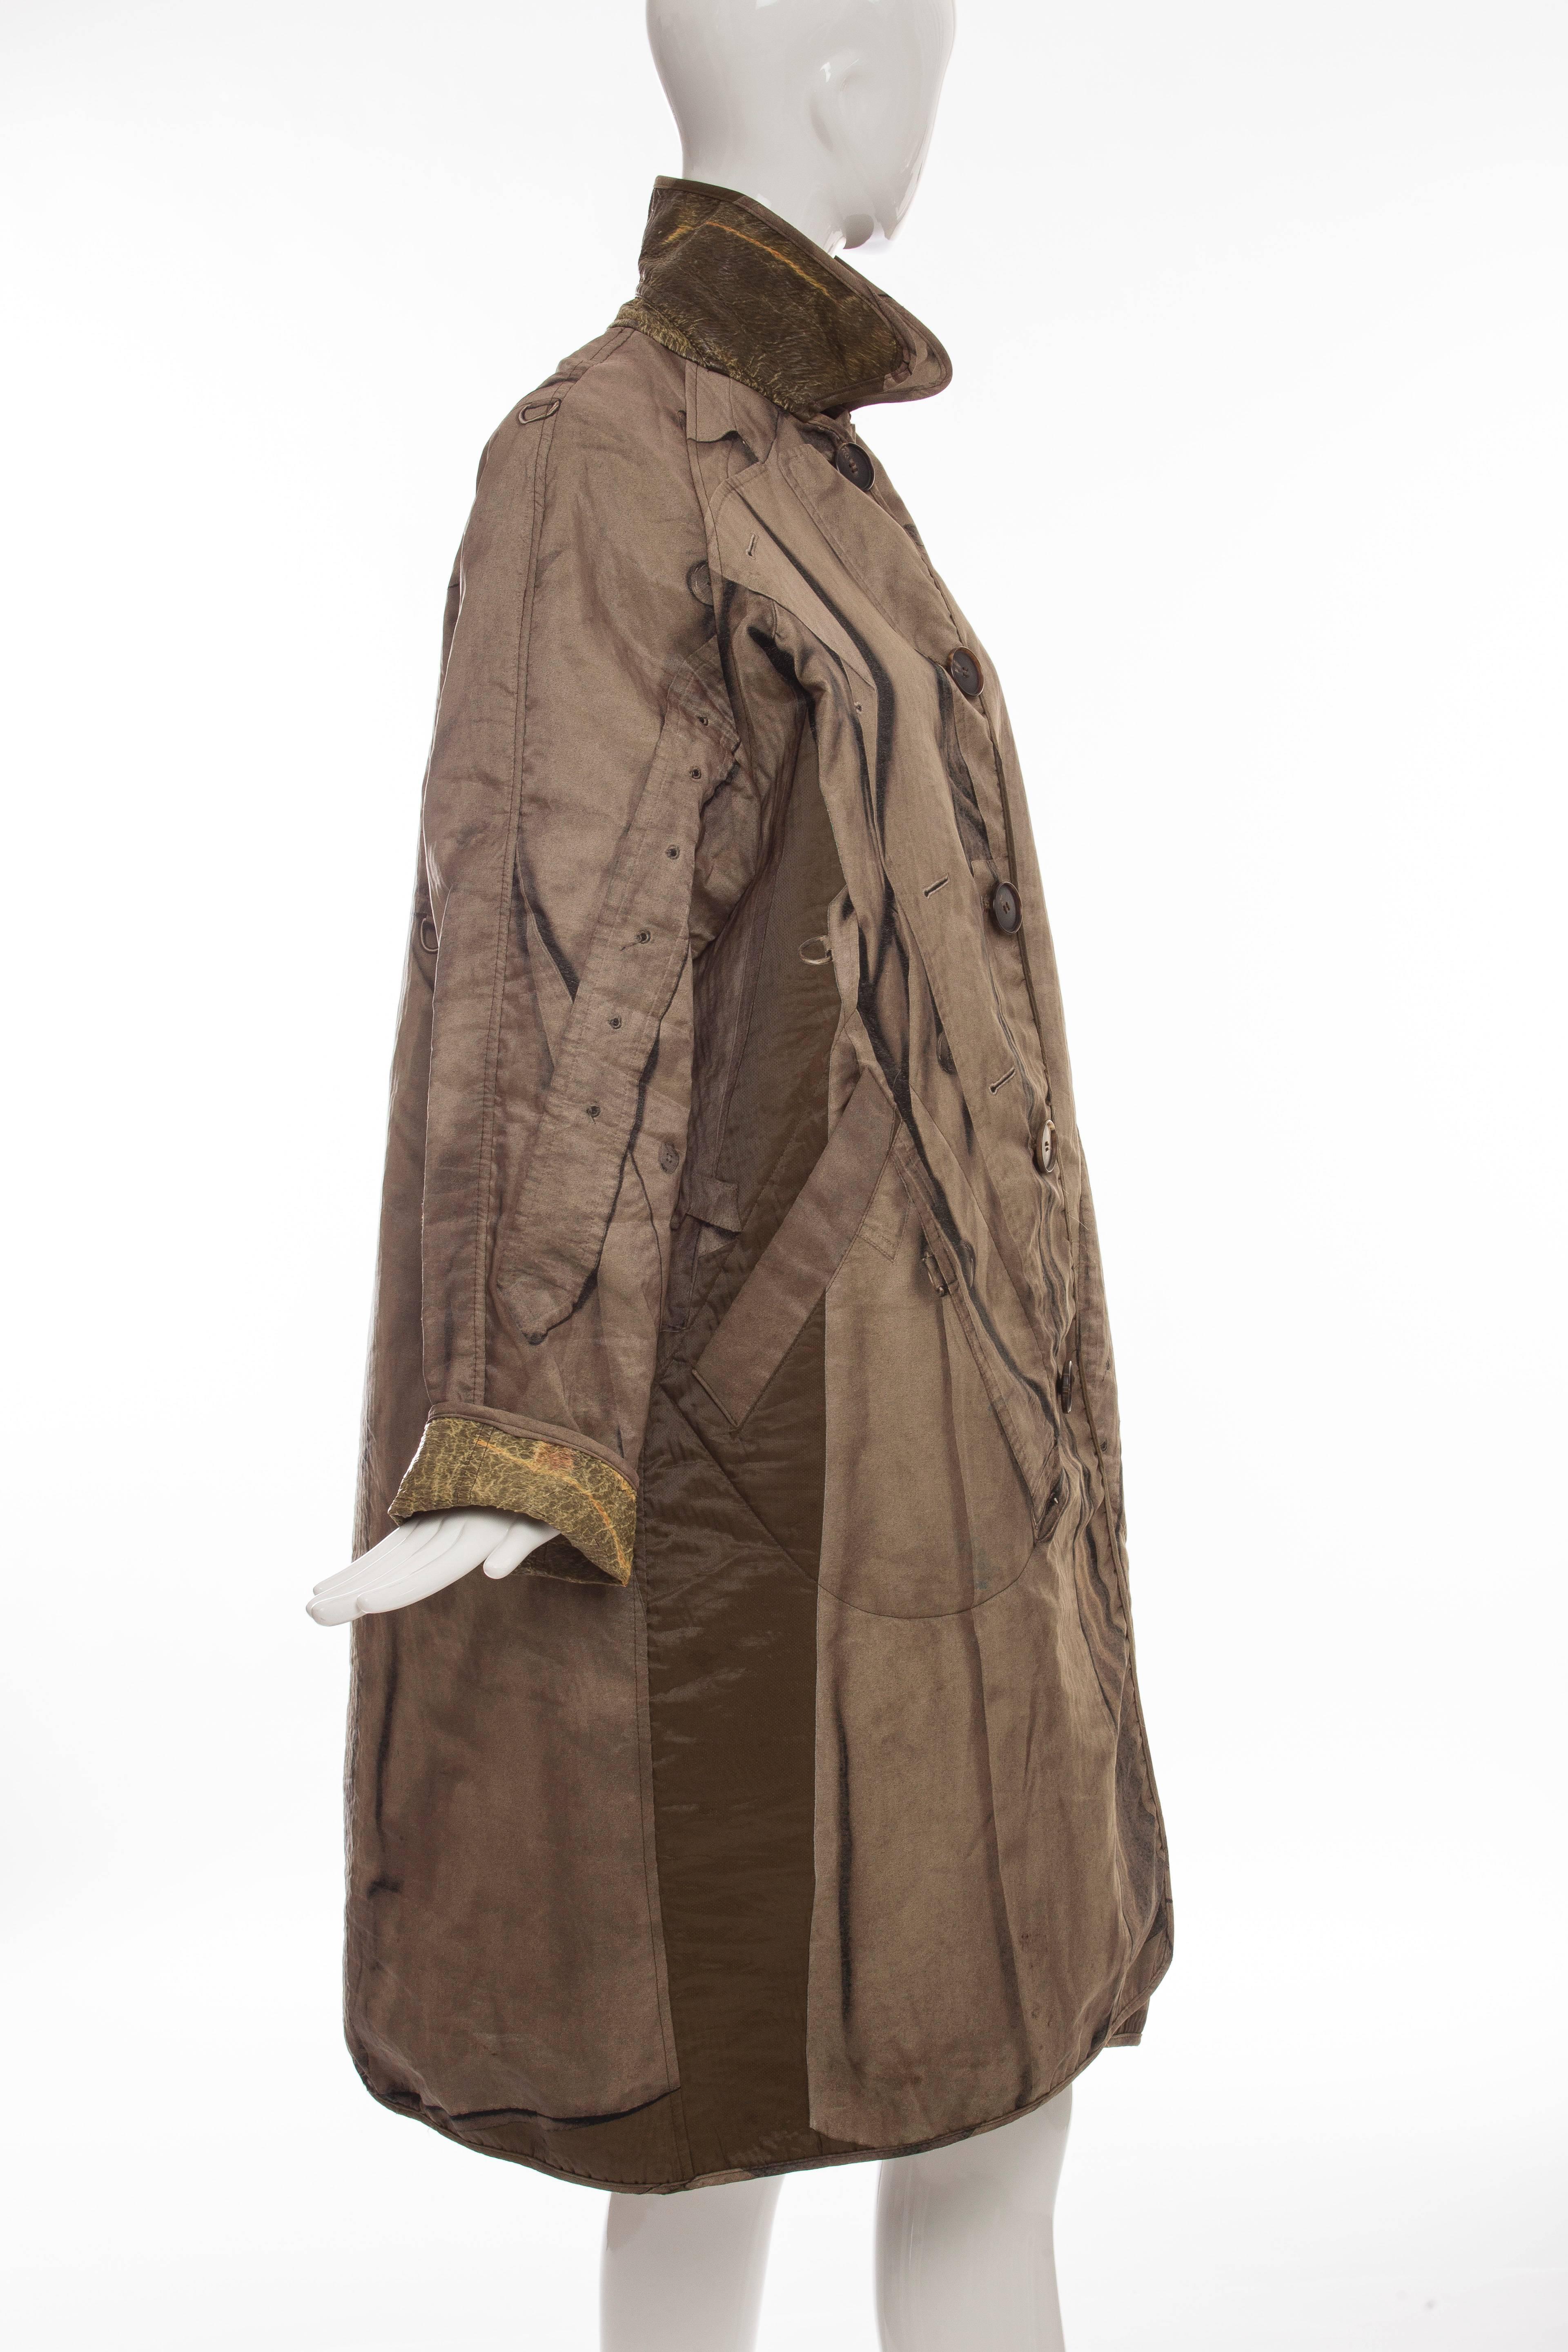 Jean Paul Gaultier Tromp L'oeil Reversible Trench Coat, Autumn - Winter 2004 3